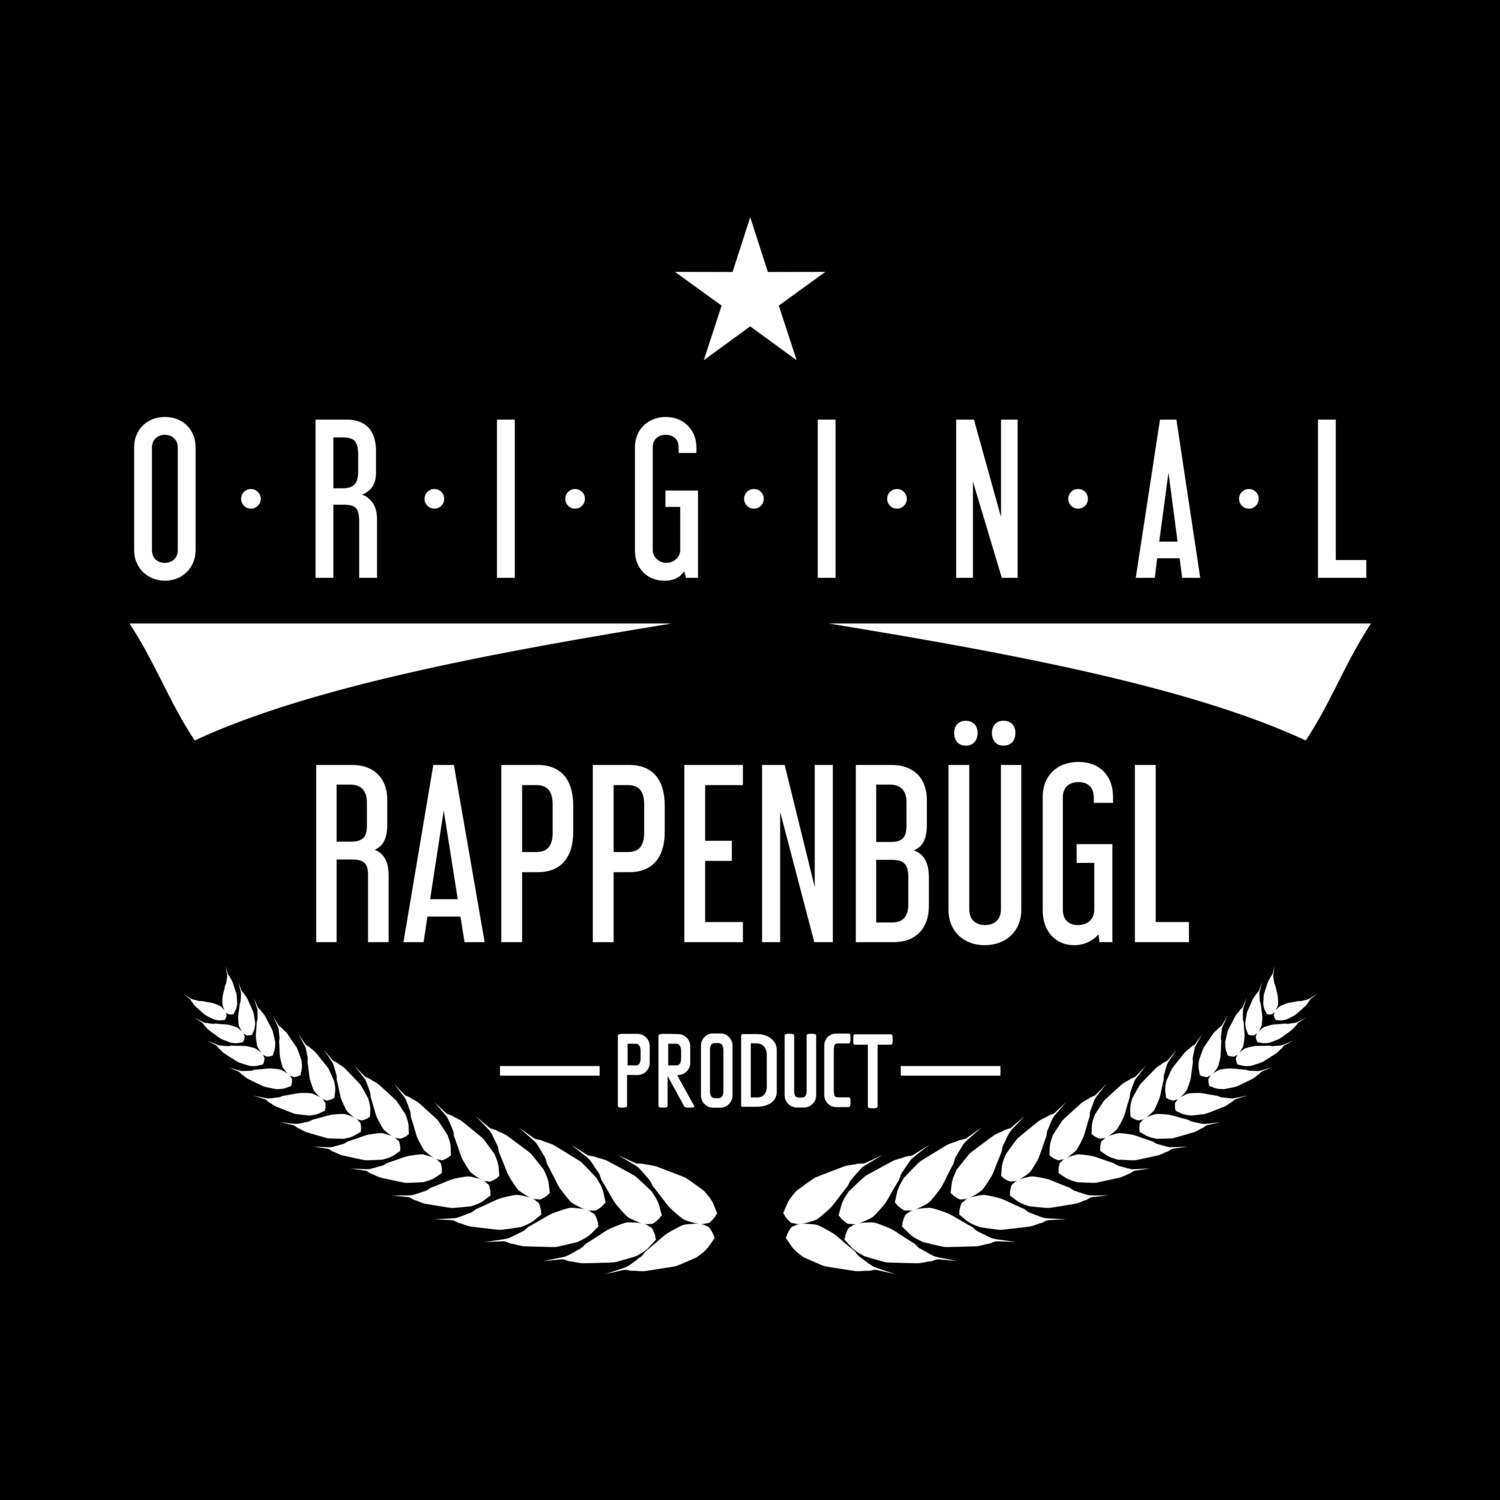 Rappenbügl T-Shirt »Original Product«